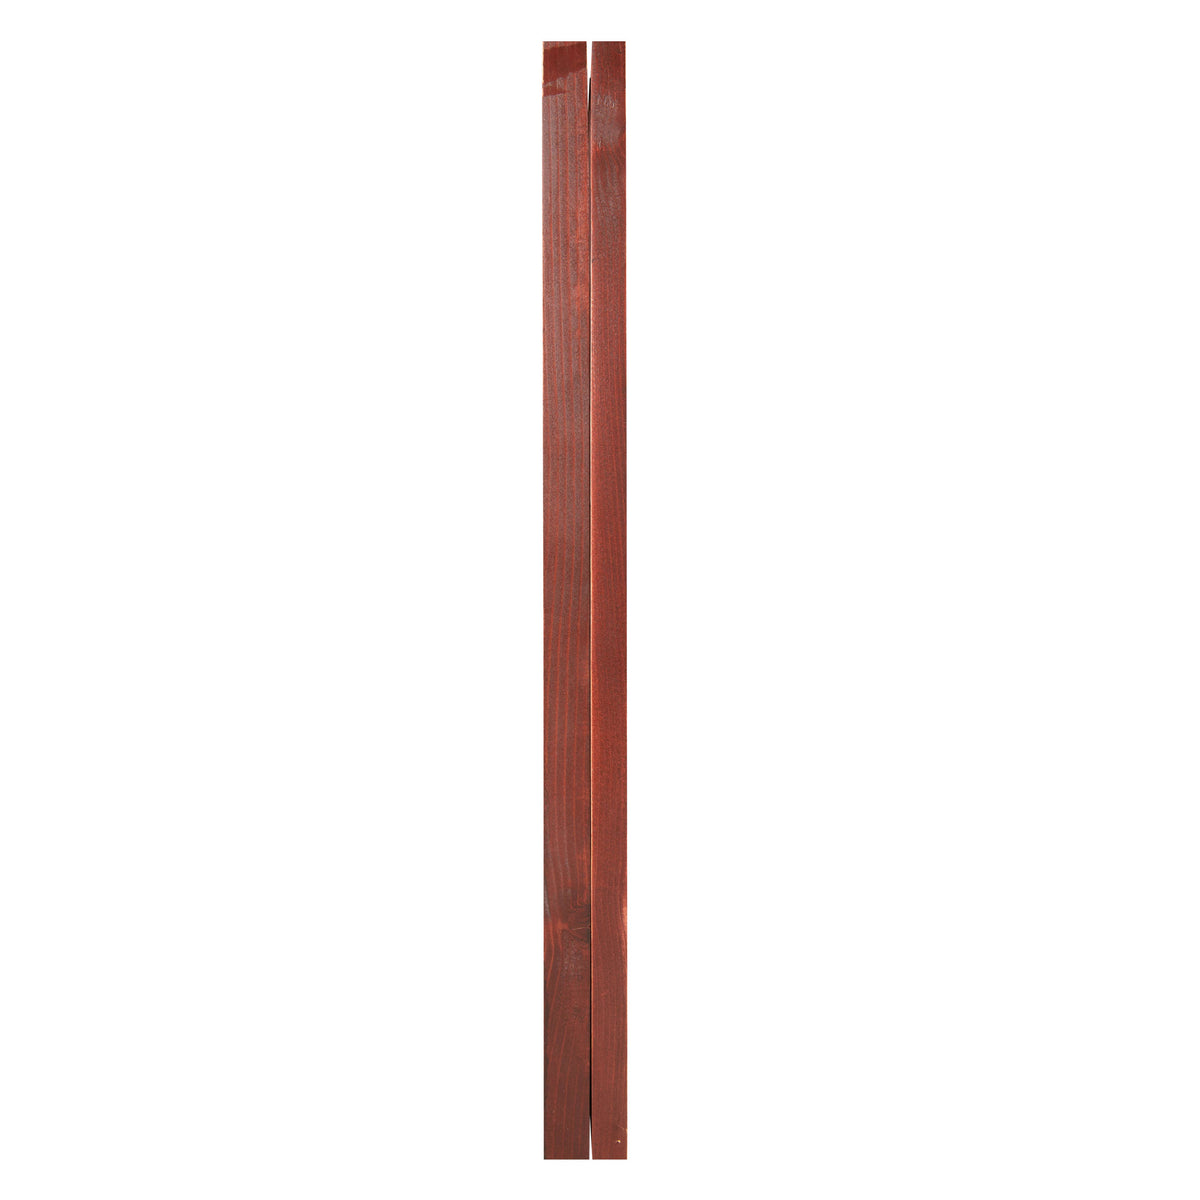 Mahogany |#| Wooden Jersey Display Case with Foam Board and Keyed Lock in Mahogany-24x36